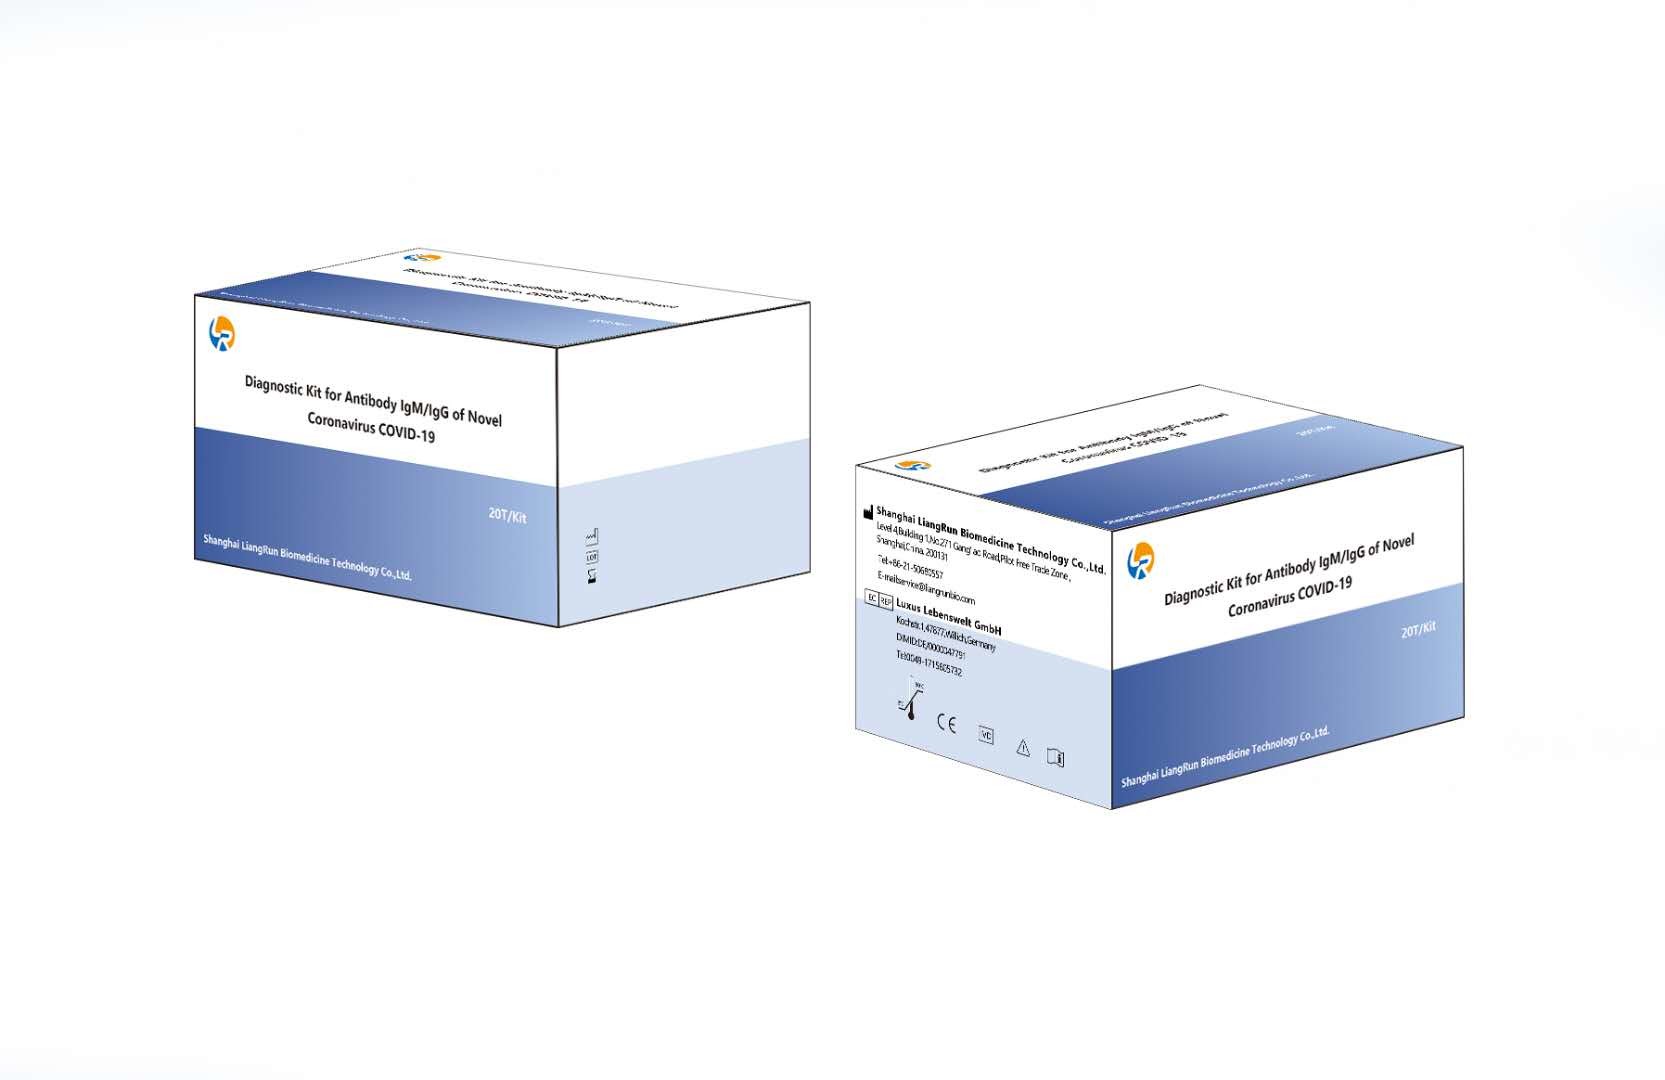  Hot Sale Diagnostic Kit for Antibody IgM/IgG of Novel Coronavirus COVID-19 Passed CE ANVISA certification Manufactures